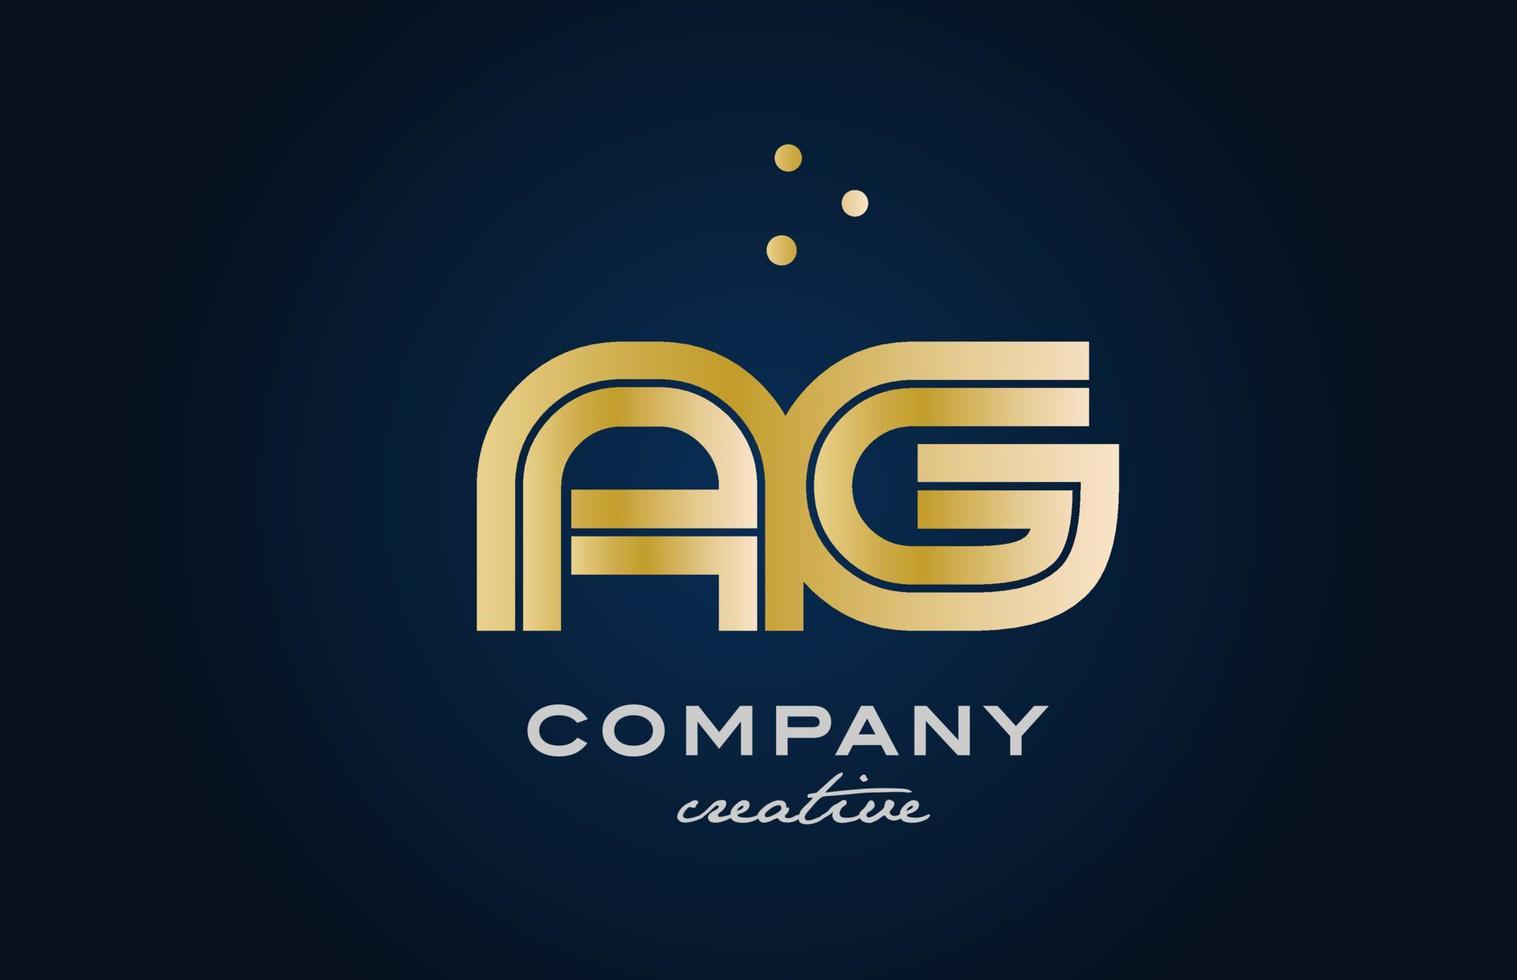 oro dorado ag combinación alfabeto negrita letra logo con puntos unido creativo modelo diseño para empresa y negocio vector